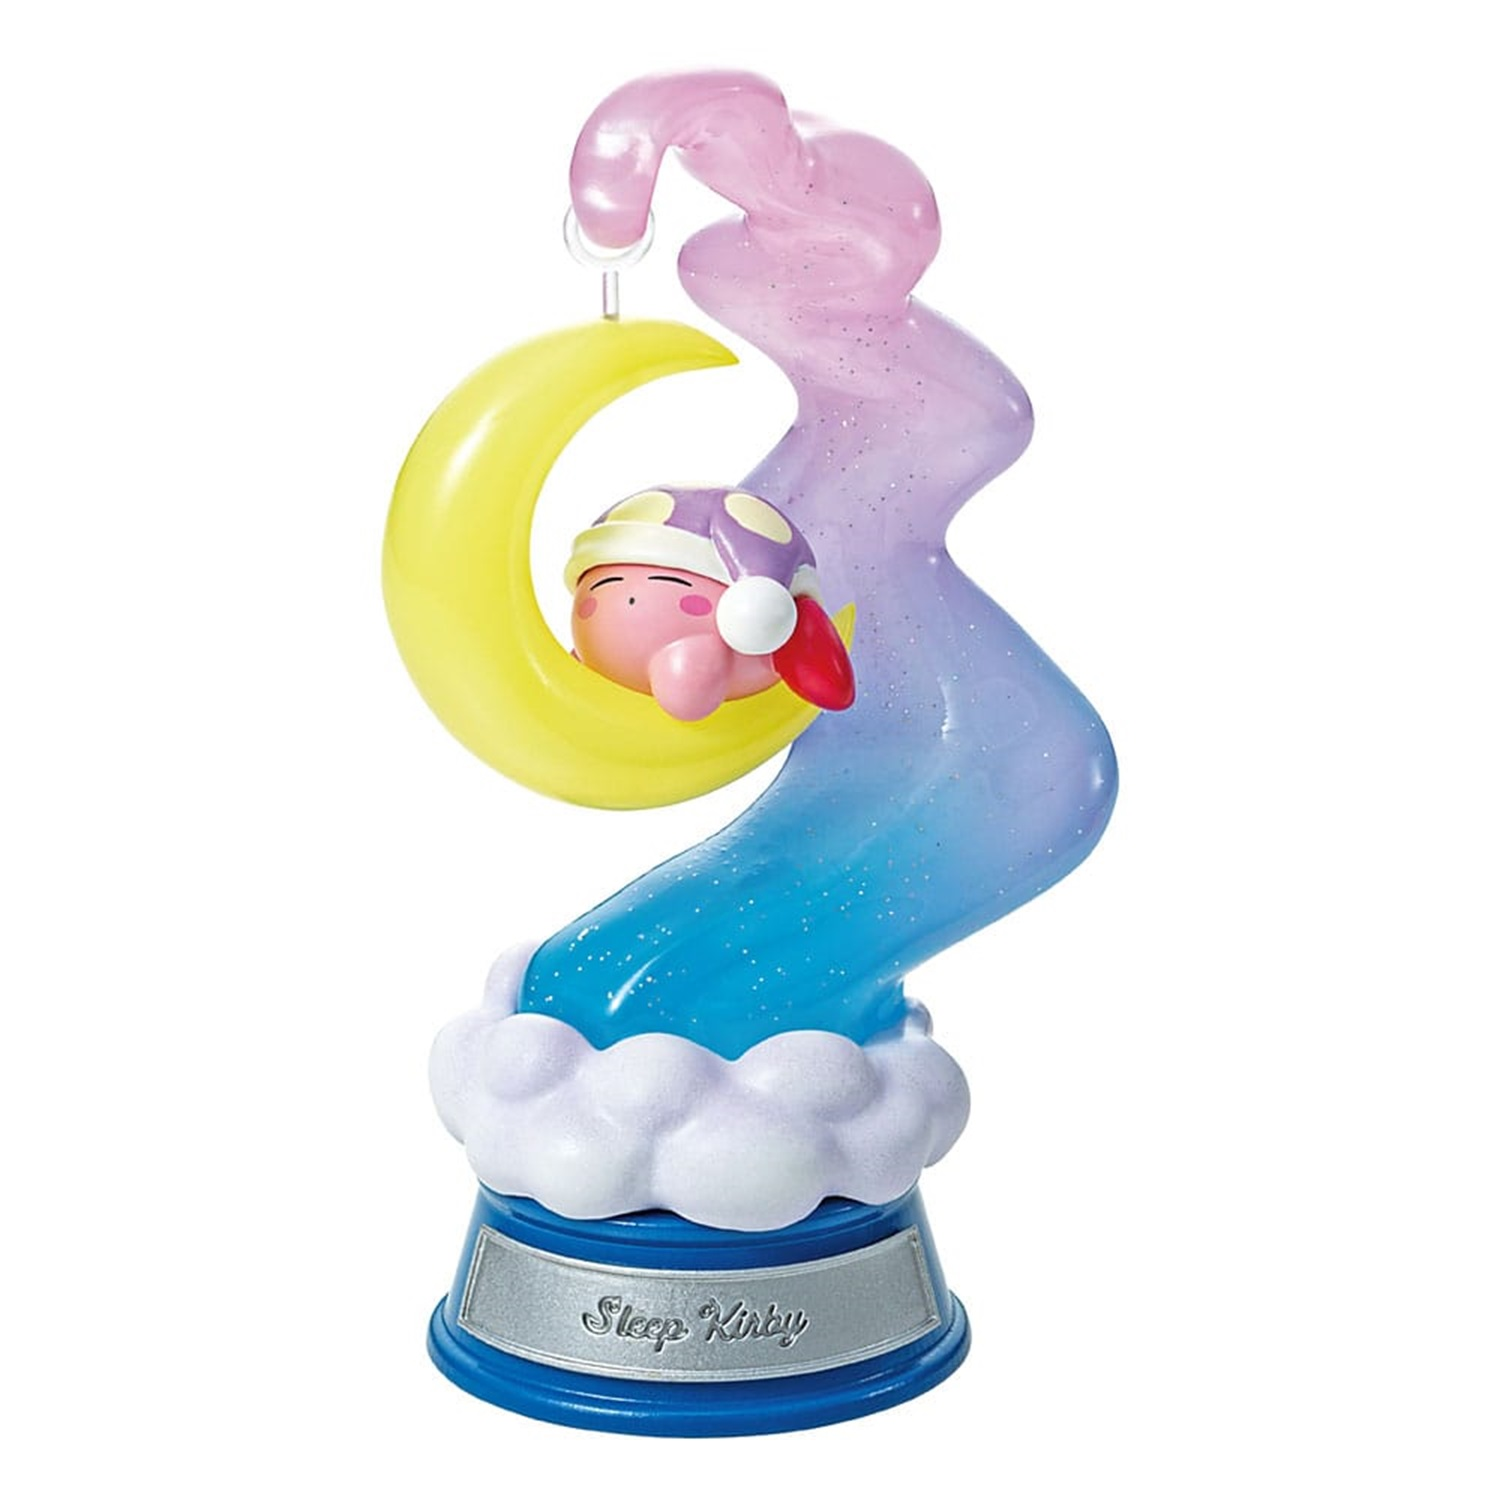 Kirby RE-MENT 6 6 Display Swing Sammelfigur in cm Kirby Minifiguren Dreamland